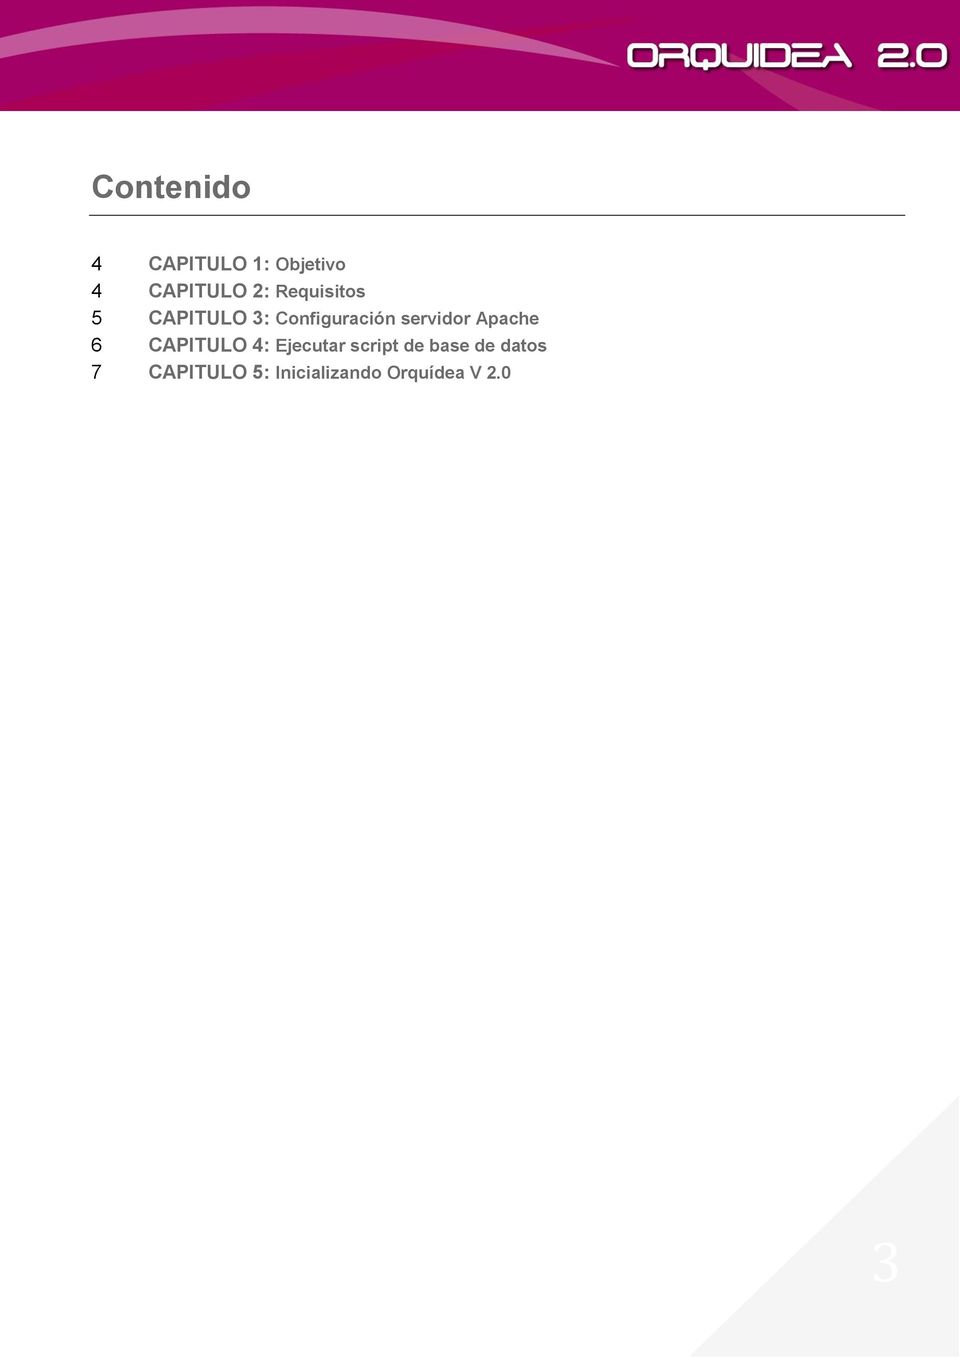 Apache 6 CAPITULO 4: Ejecutar script de base de